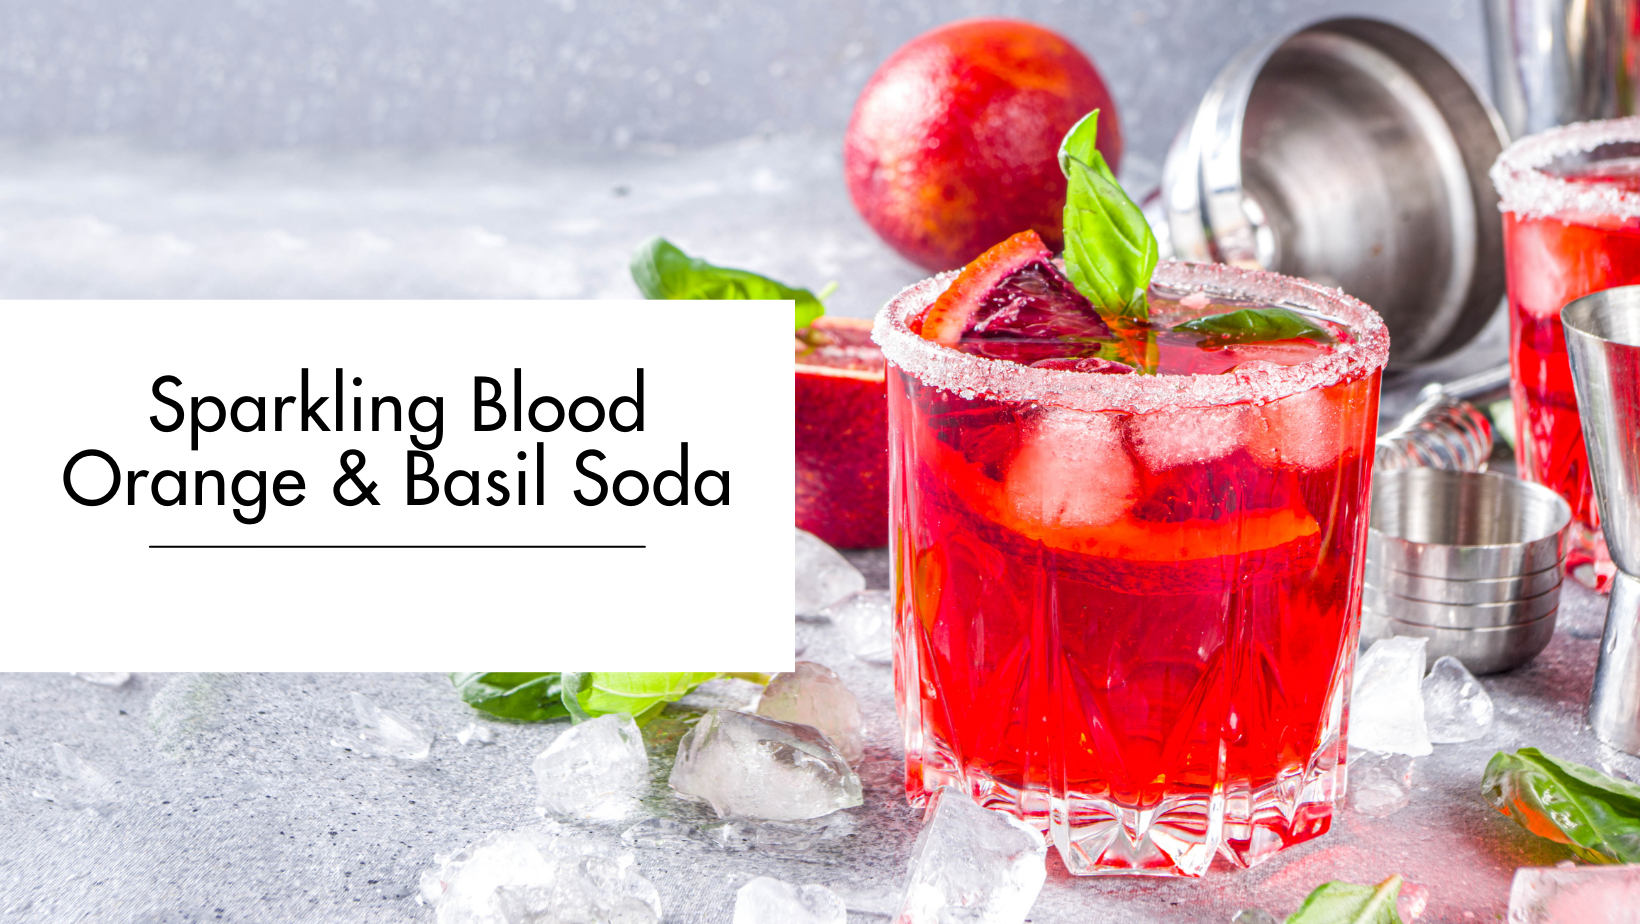 Sparkling Blood Orange & Basil Soda